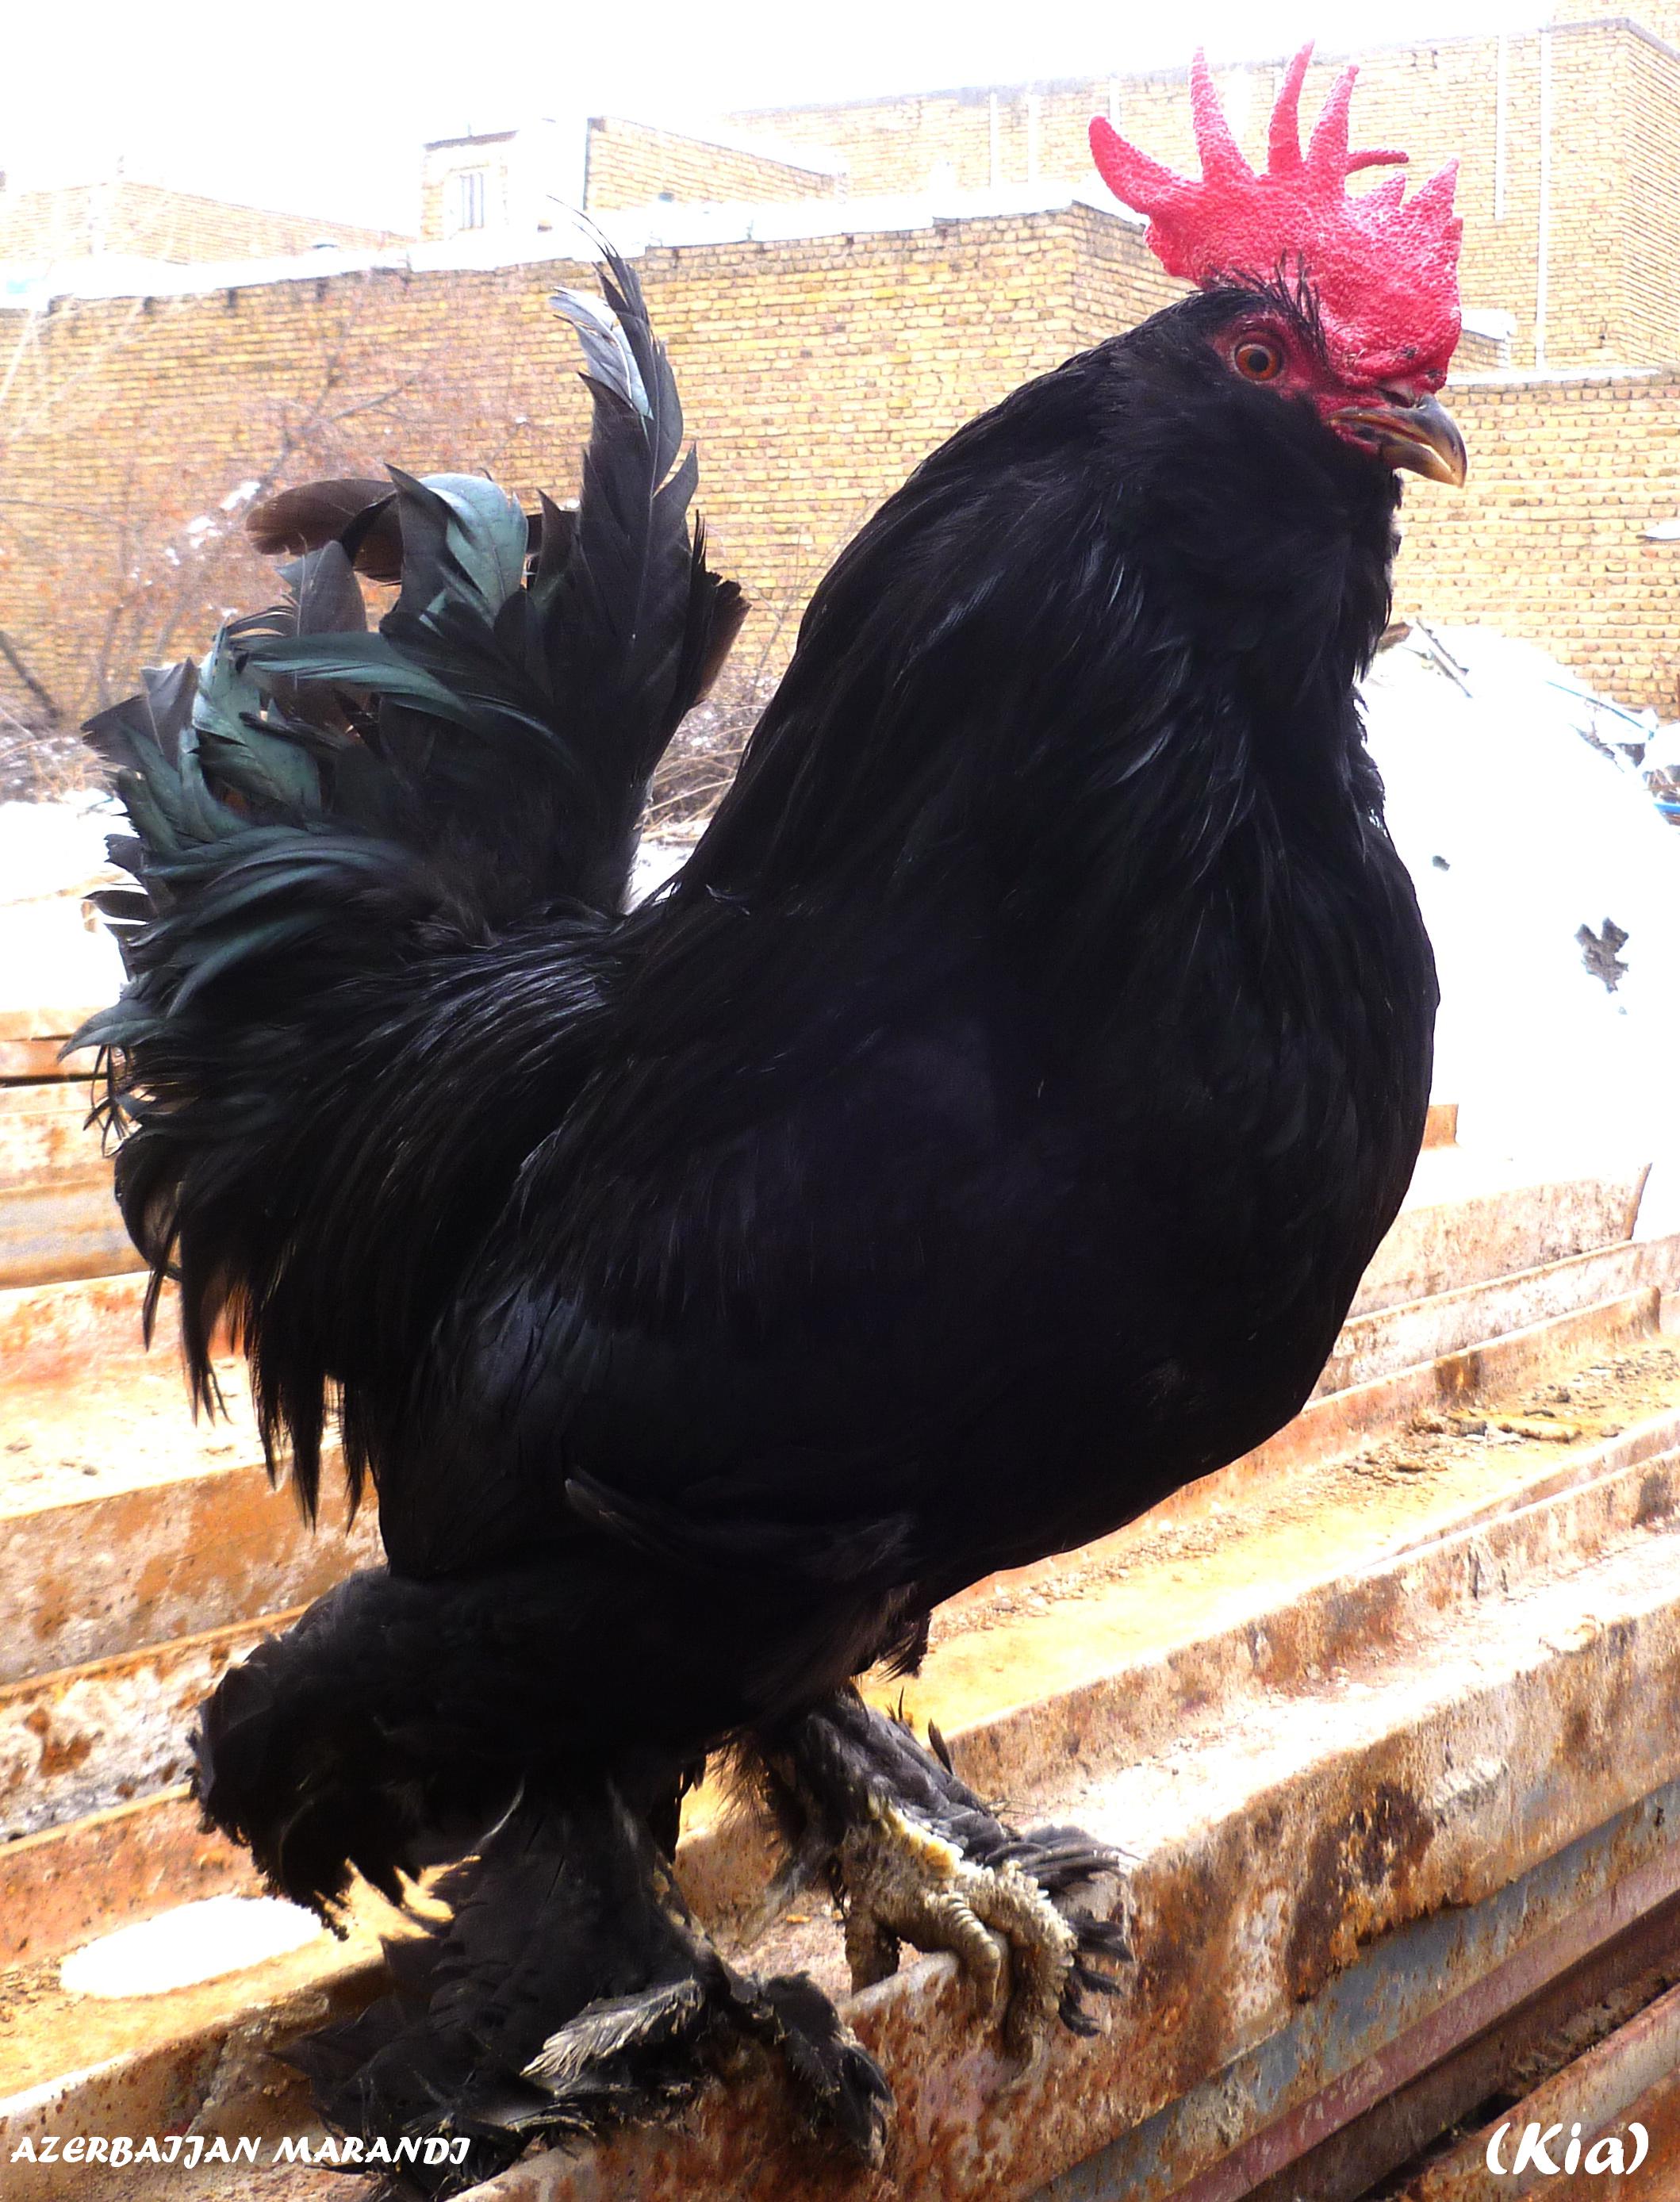 AZERBAIJAN MARAND BREED
Rare Breed Poultry
black Azerbaijan